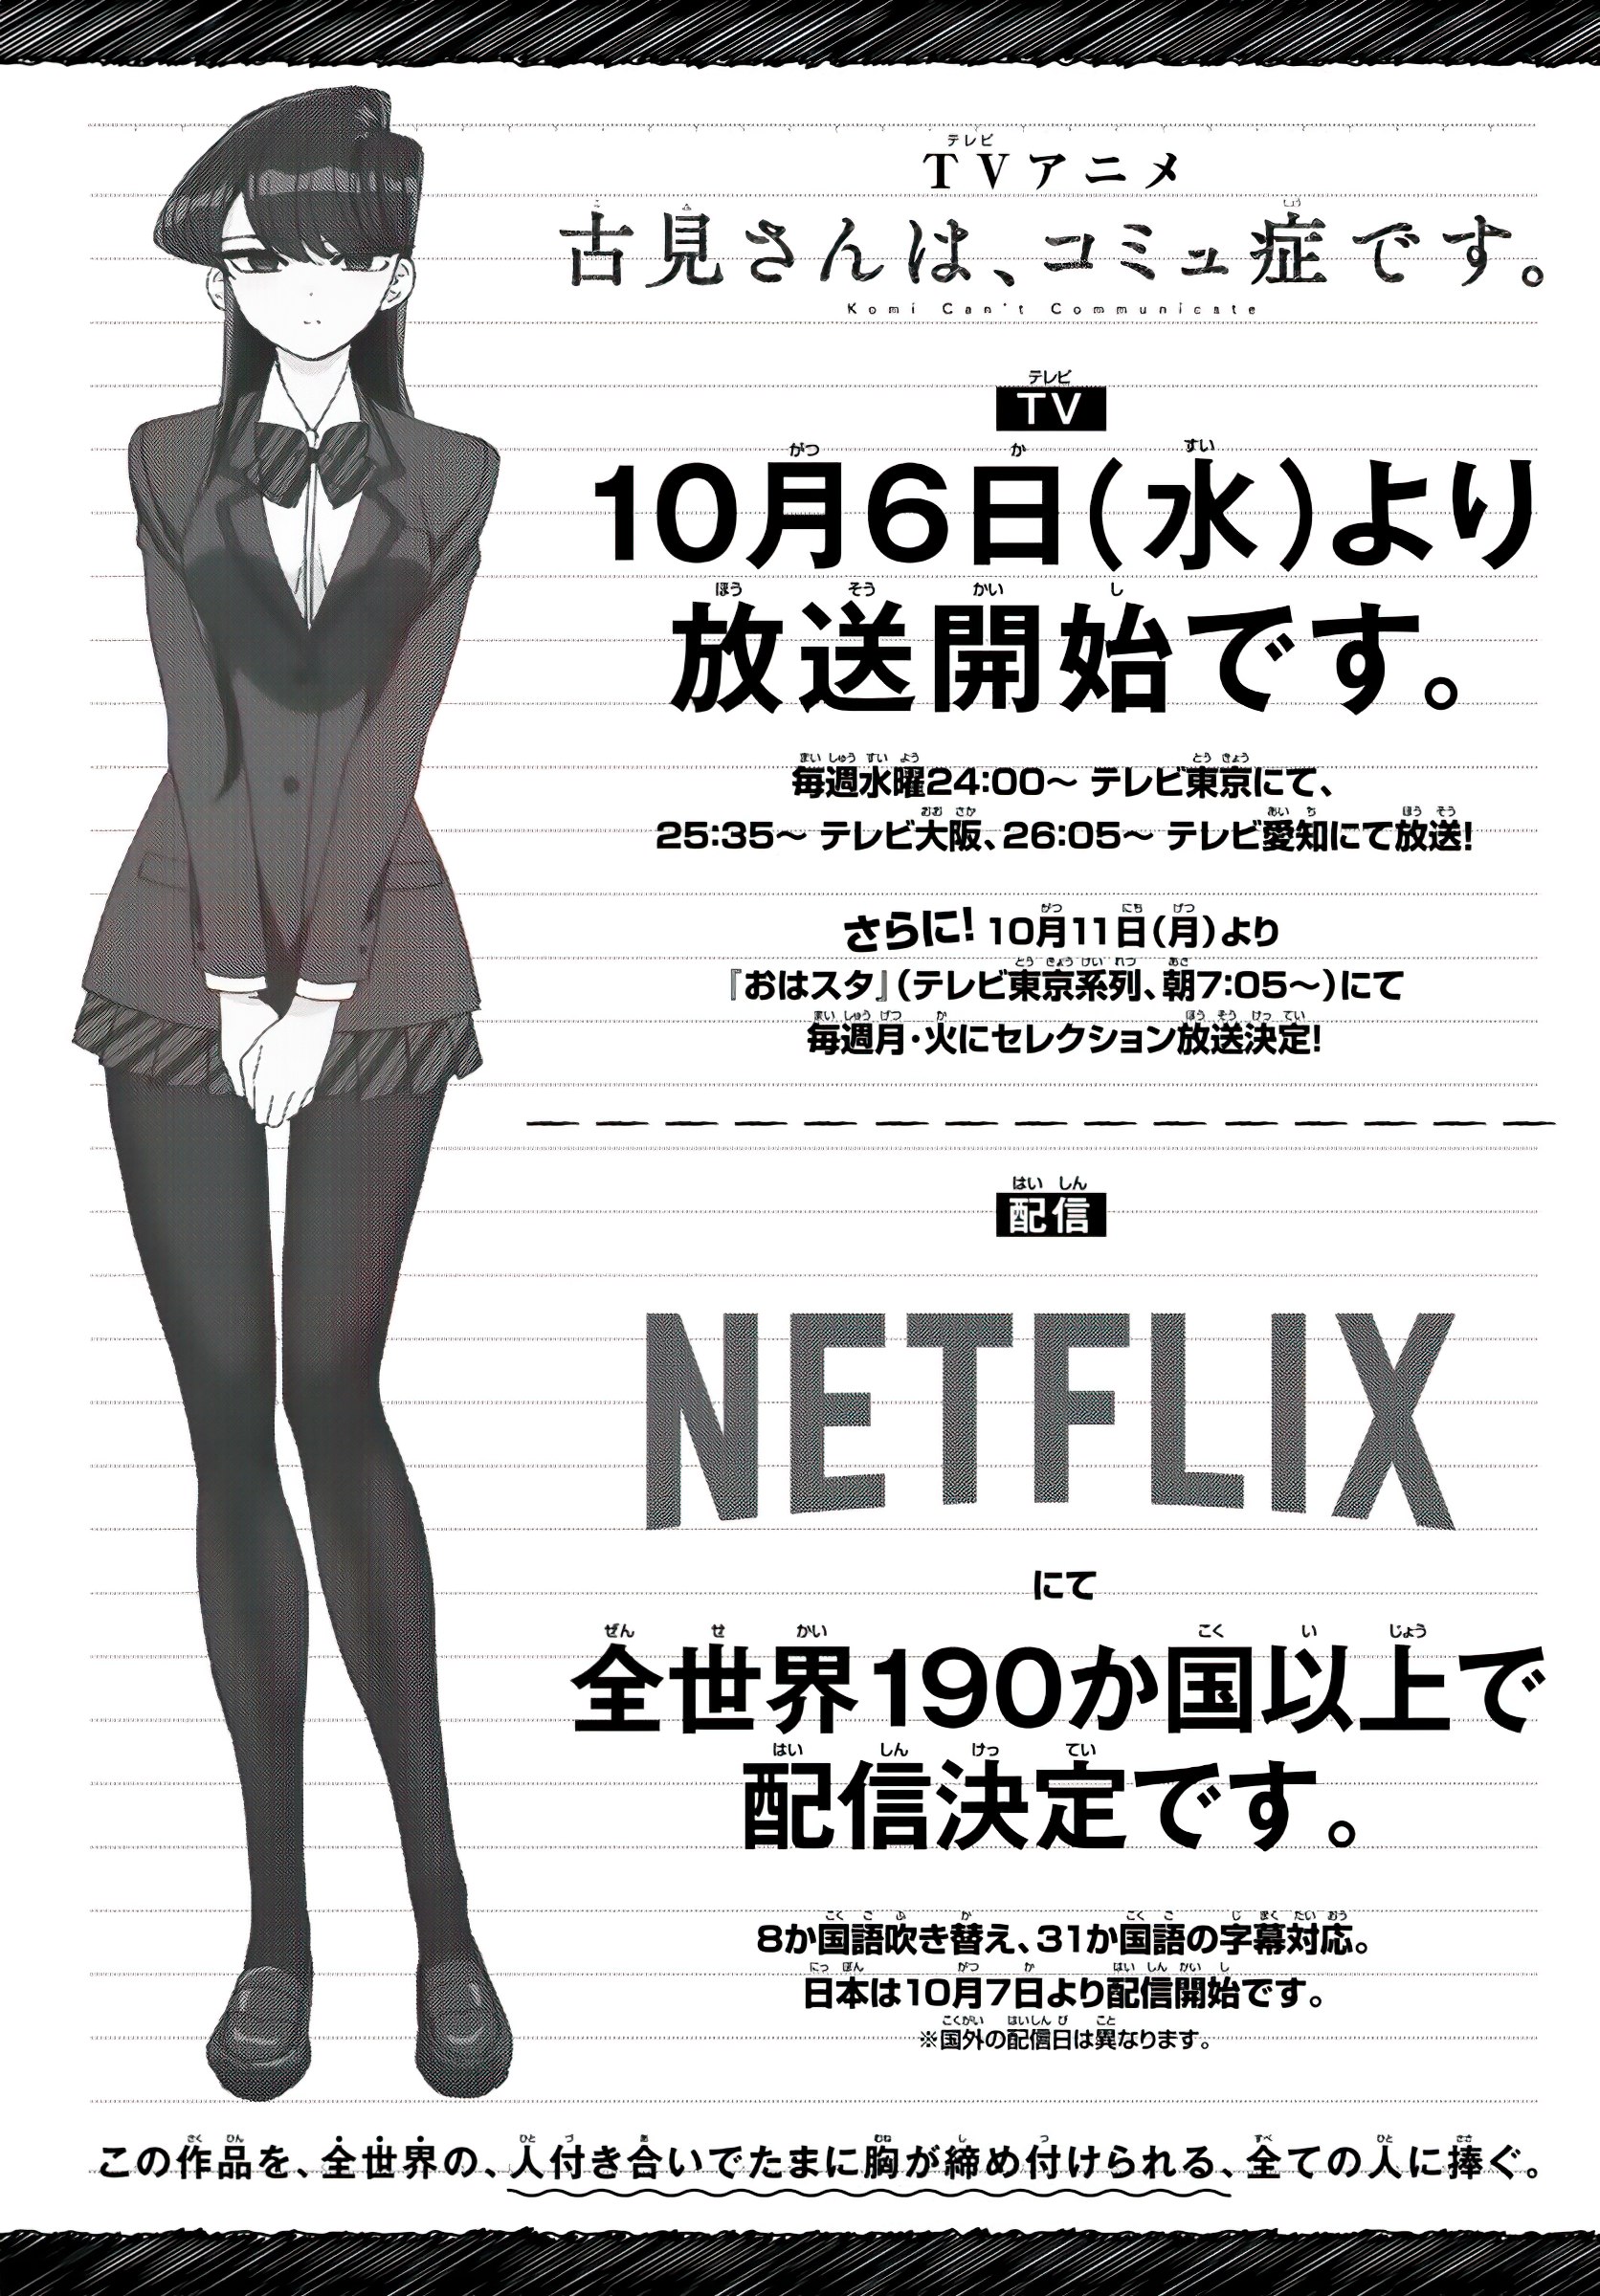 Segunda fase de Komi-San chega na Netflix